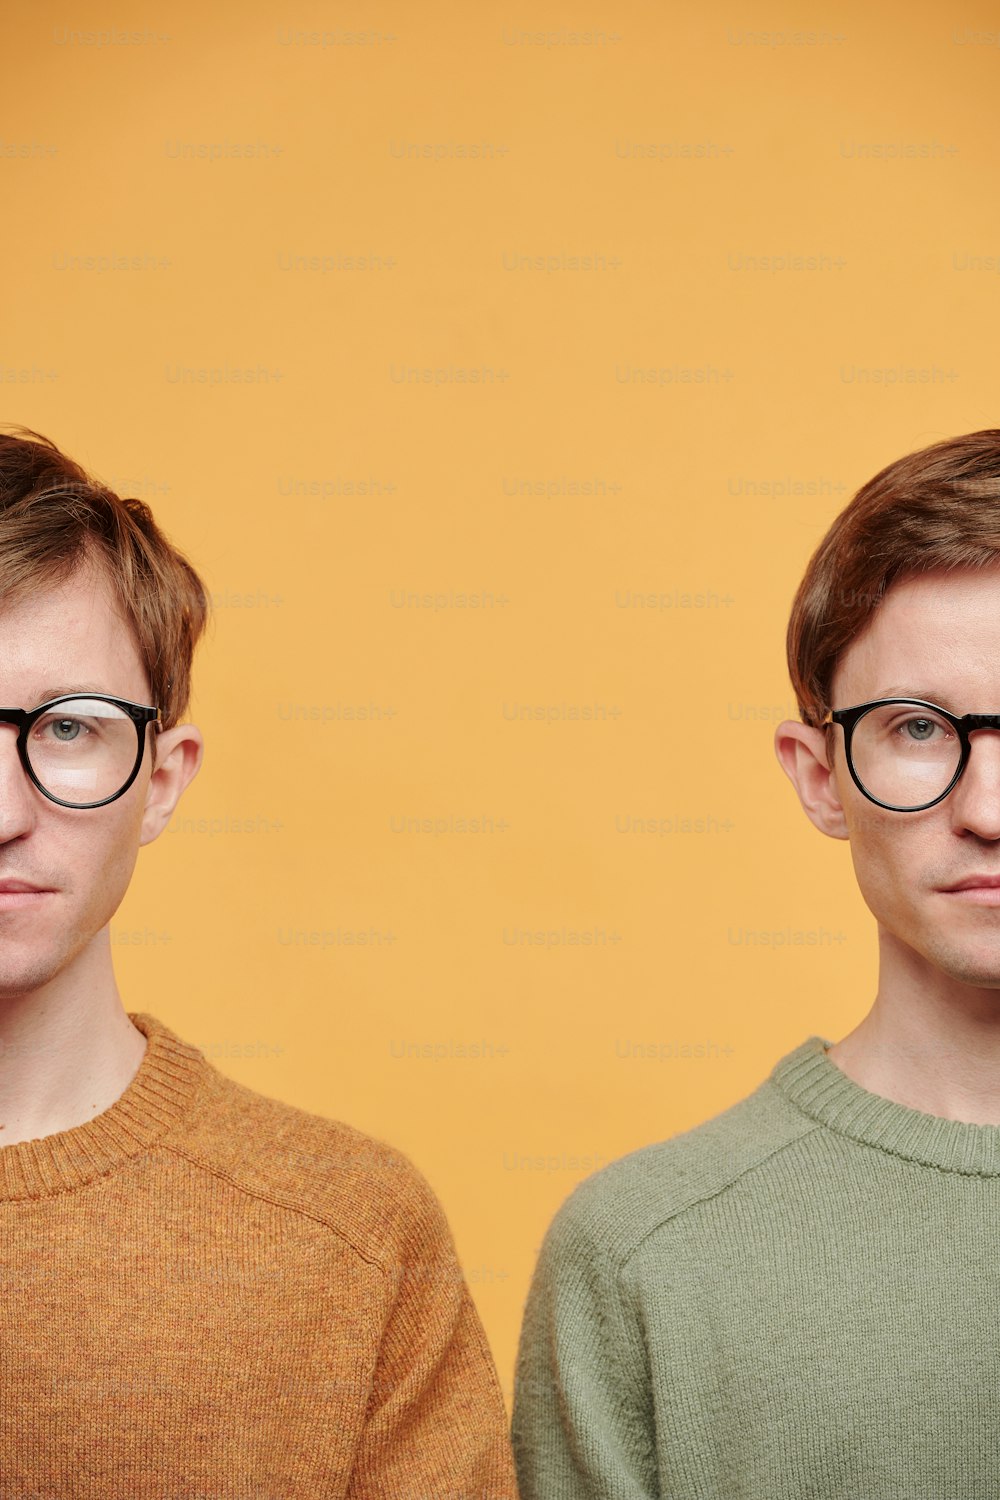 Half faces of tweens in eyewear and bright sweaters standing against orange background